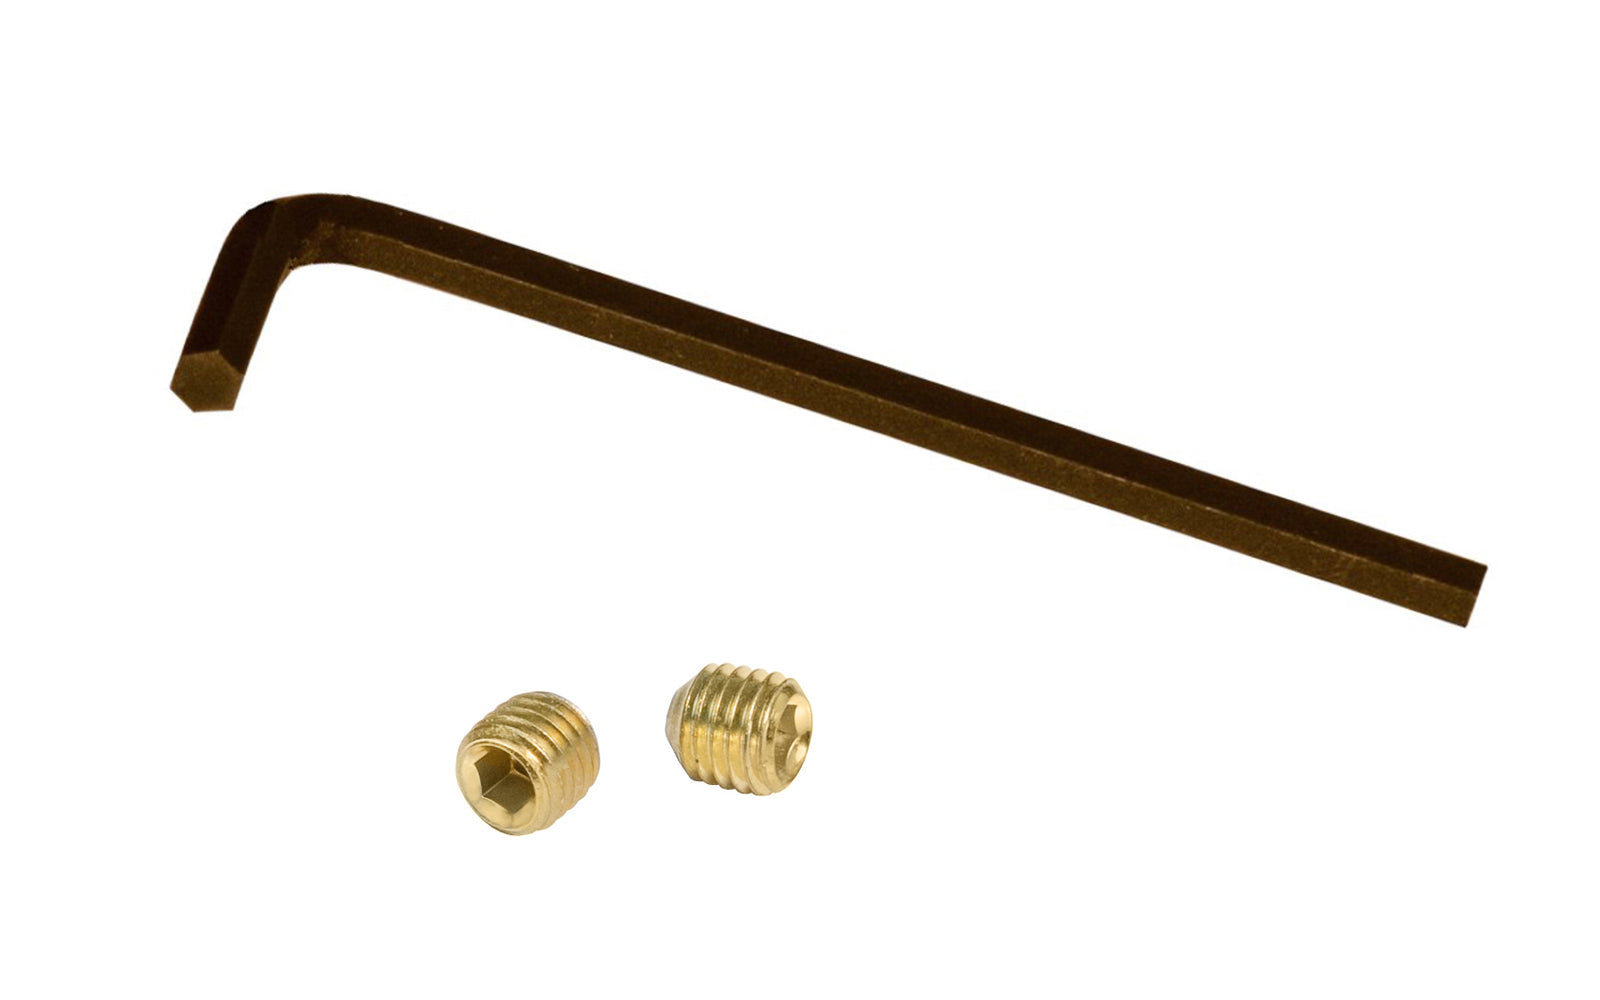 Pair of Set Screws & Hex Key for Doorknobs ~ 32 TPI x 1/4 Size